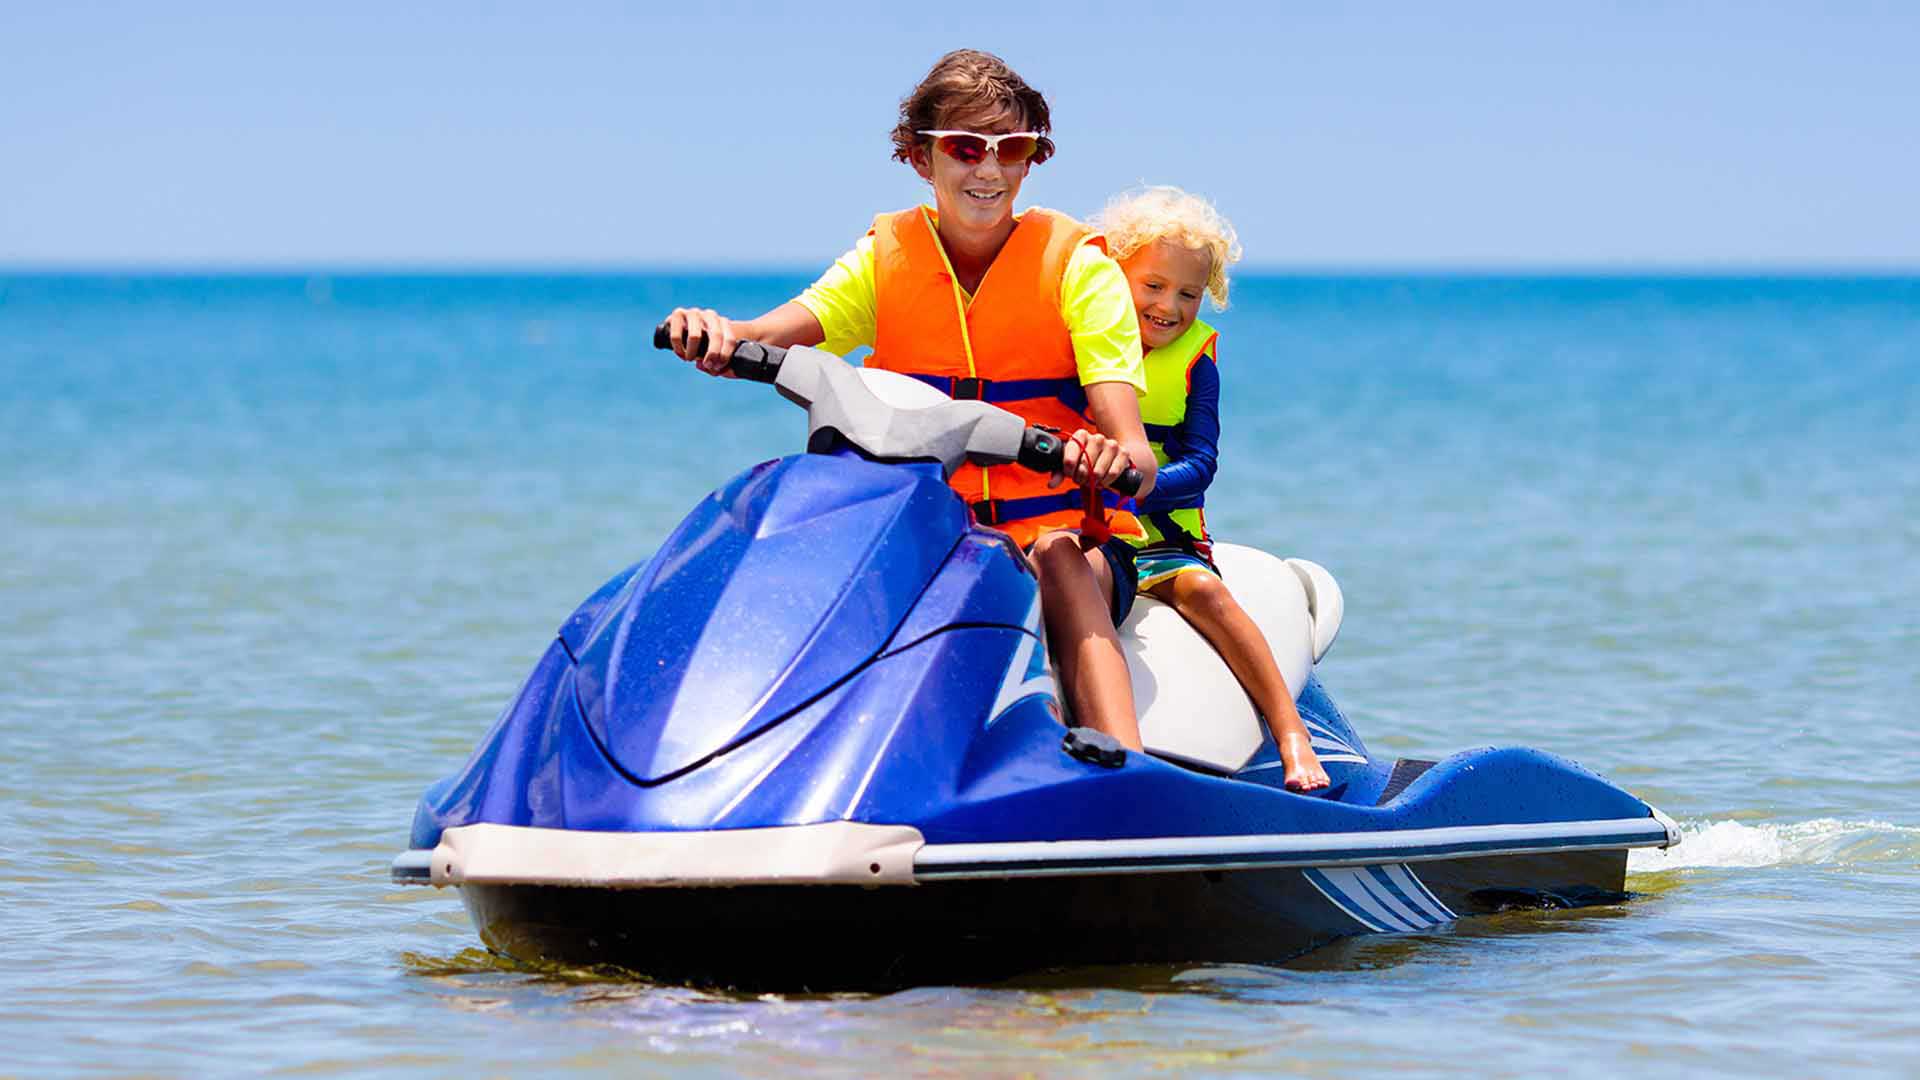 Kids wearing life vest on jet ski